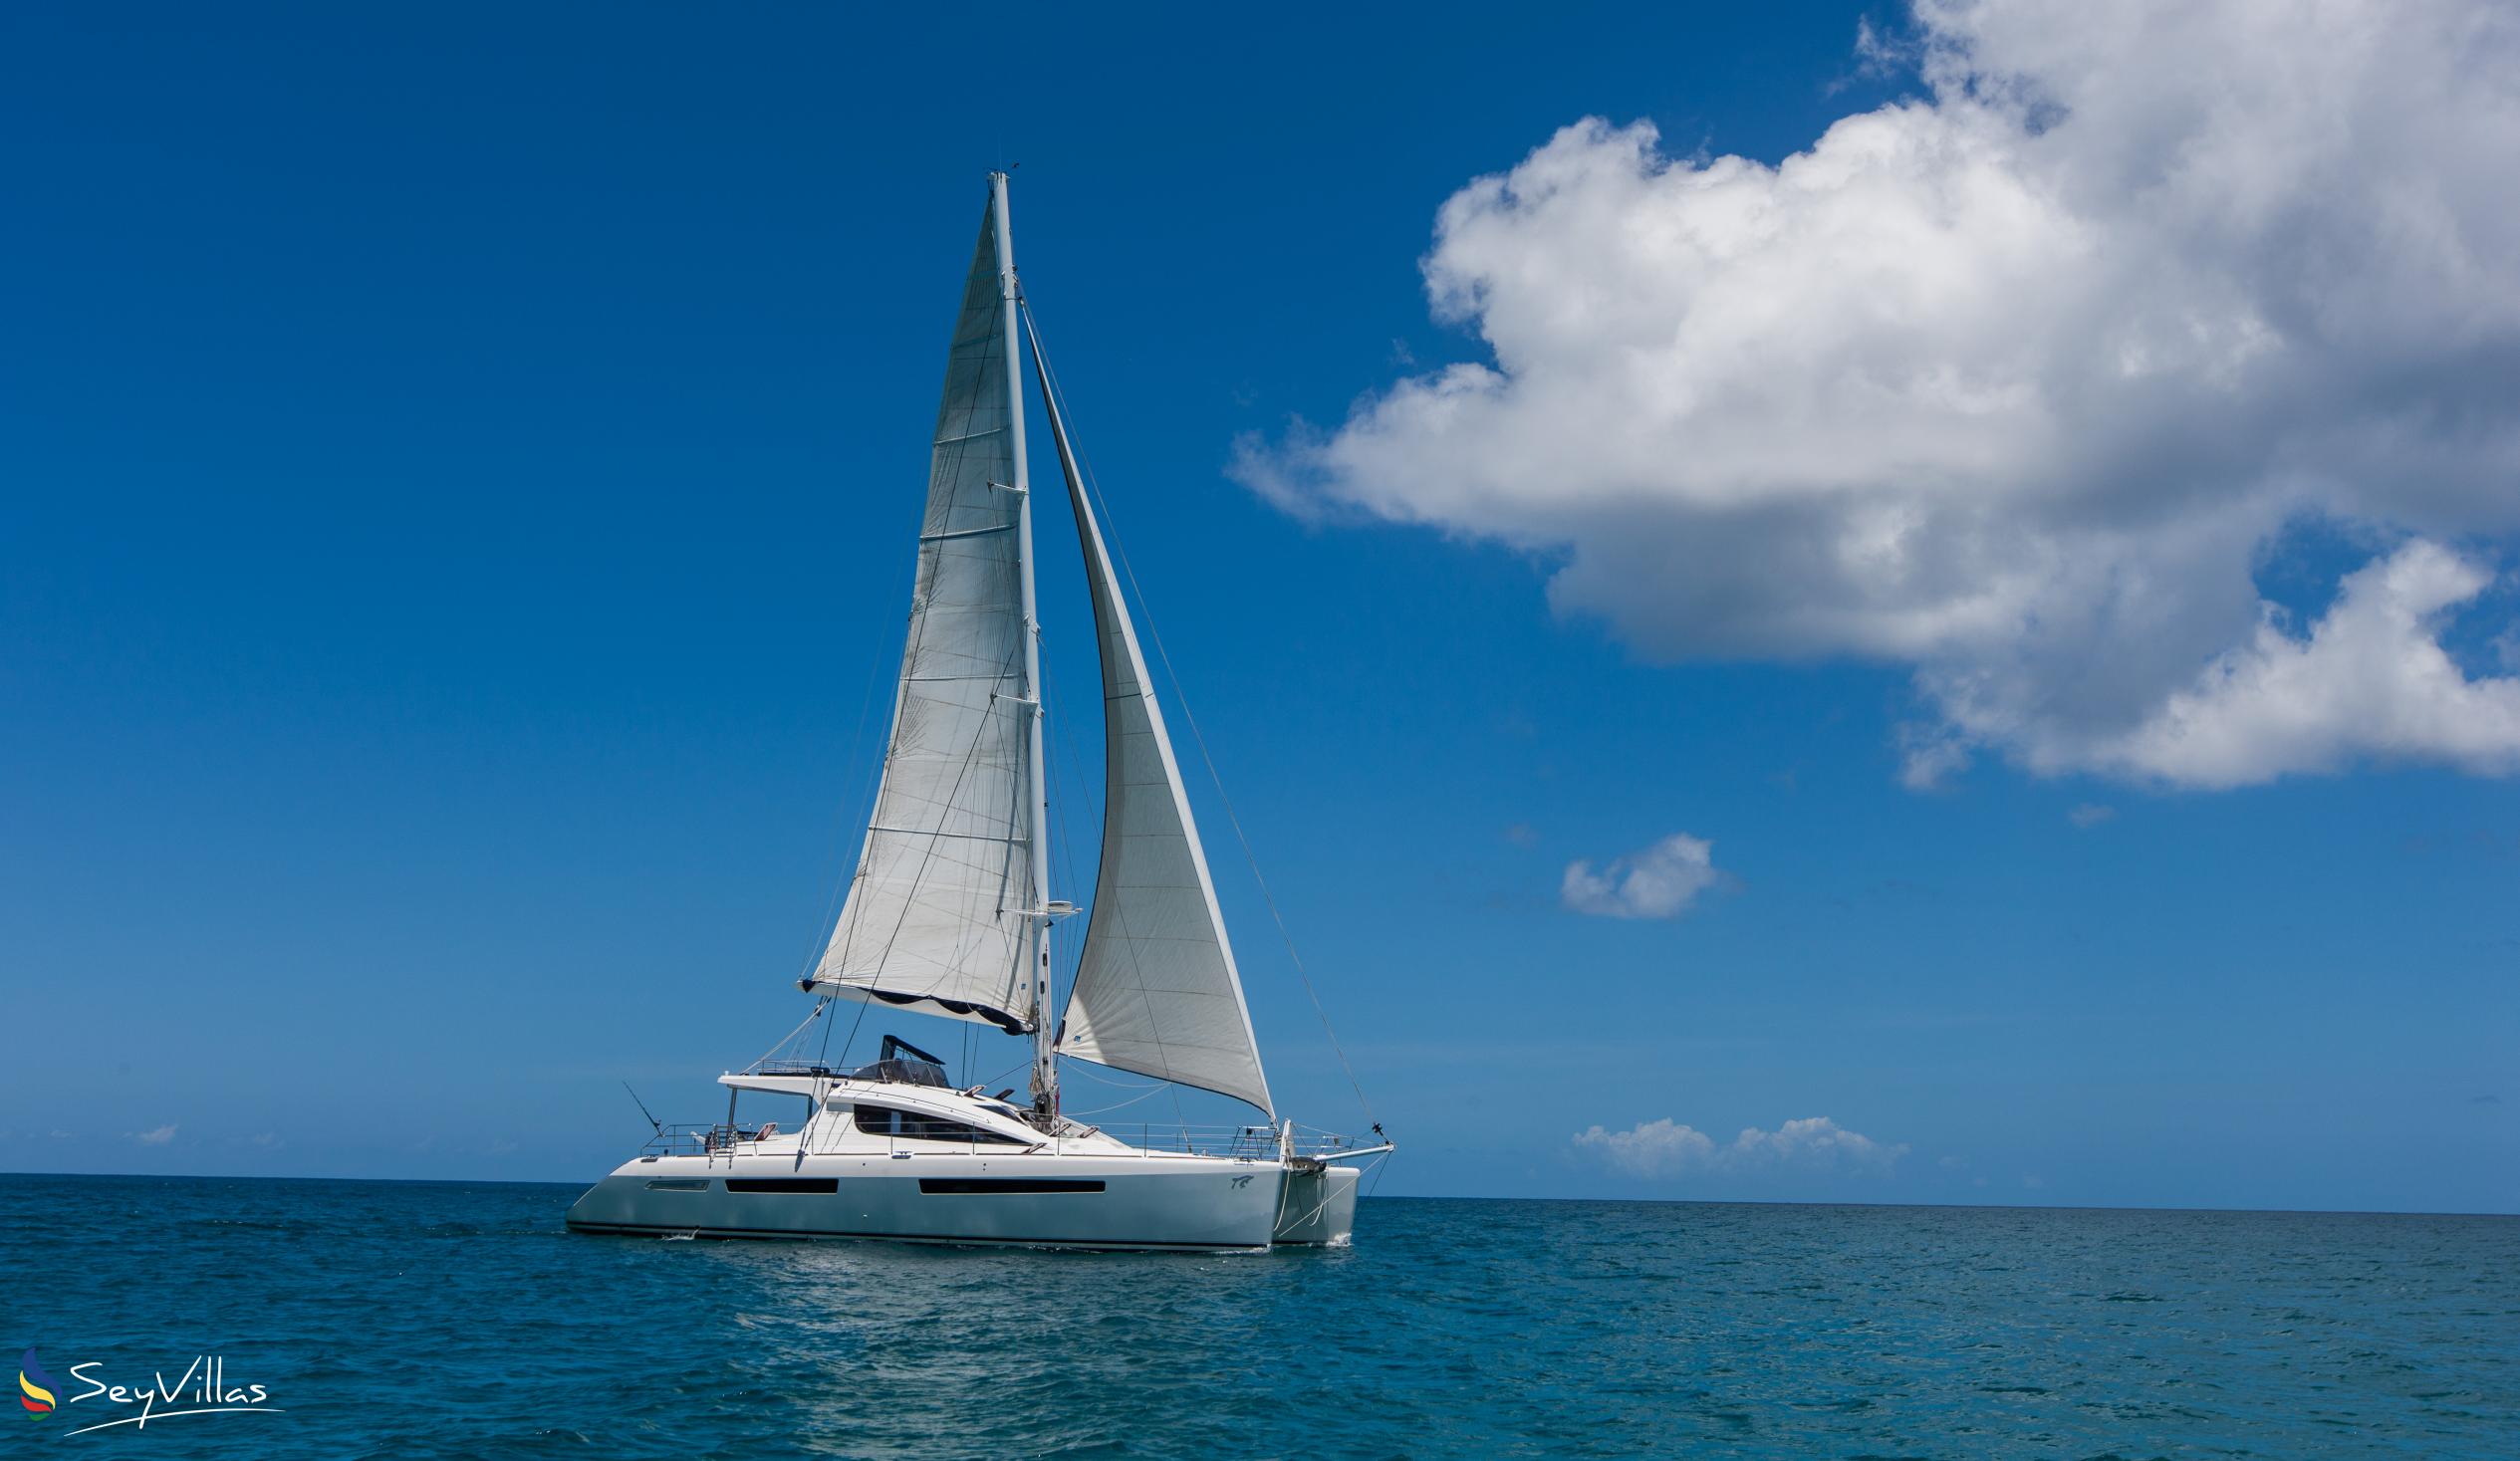 Foto 81: Seyscapes Yacht Charter - Vollcharter Cirrus - Seychellen (Seychellen)